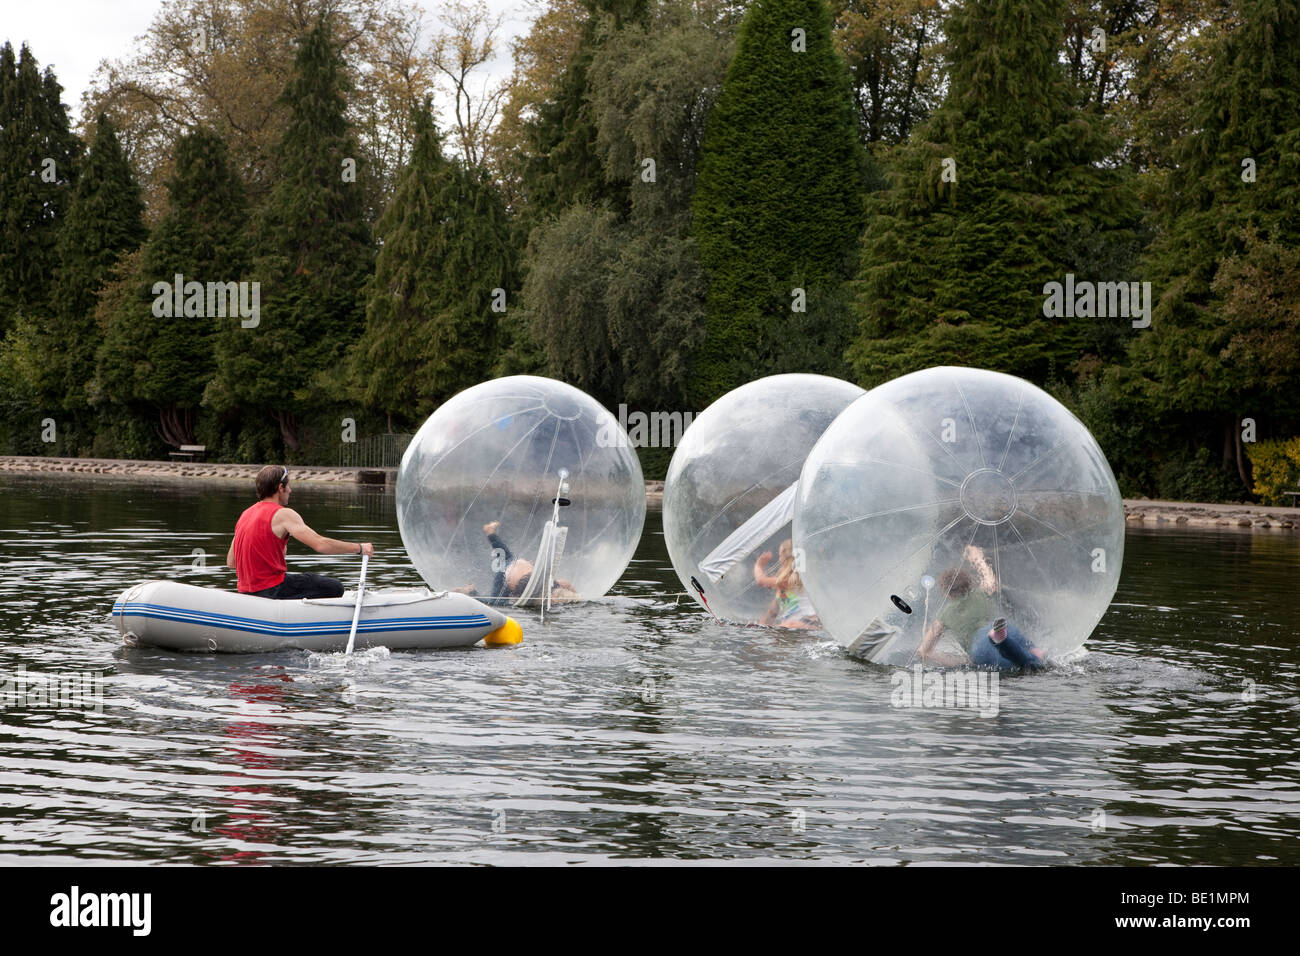 Three young girls playing inside a bubblerunner across the public lake at Rouken Glen park, Glasgow, UK, Scotland Stock Photo